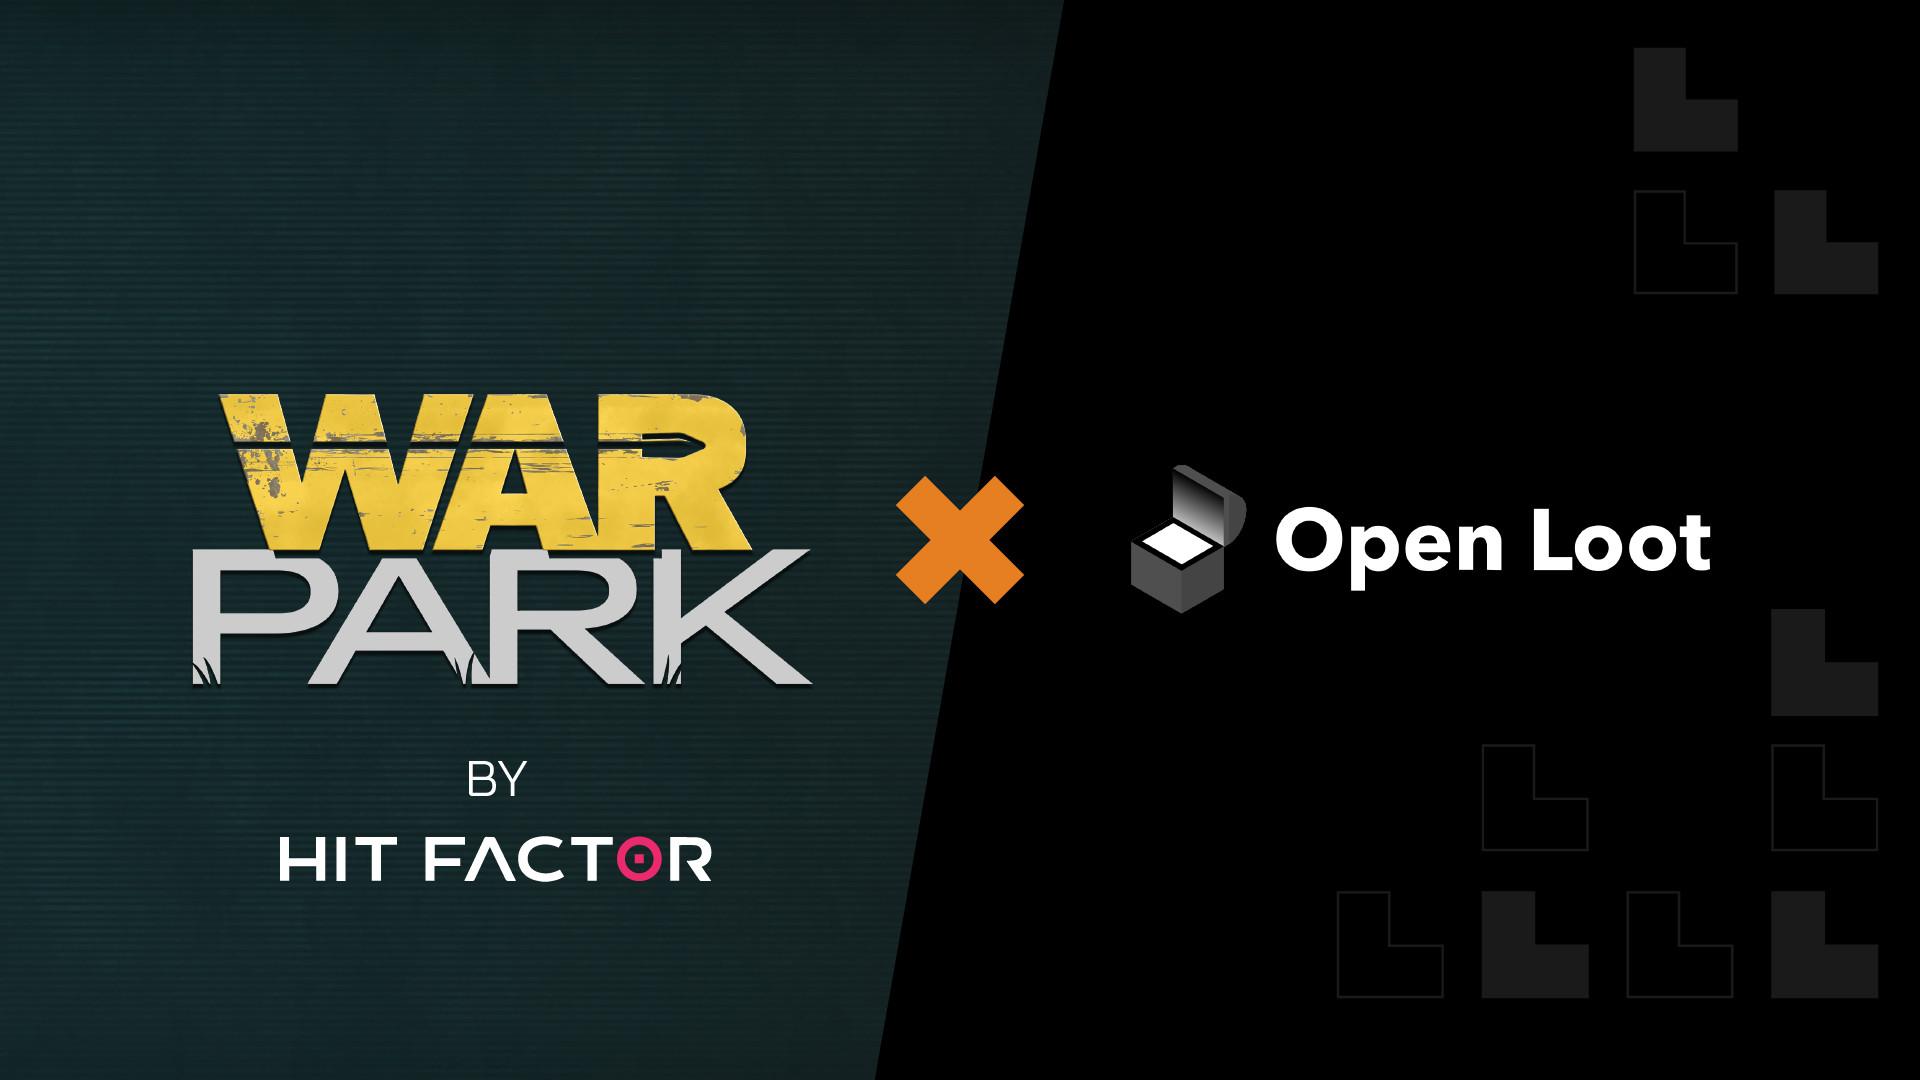 Open Loot Announces partnership with Hit Factor’s War Park